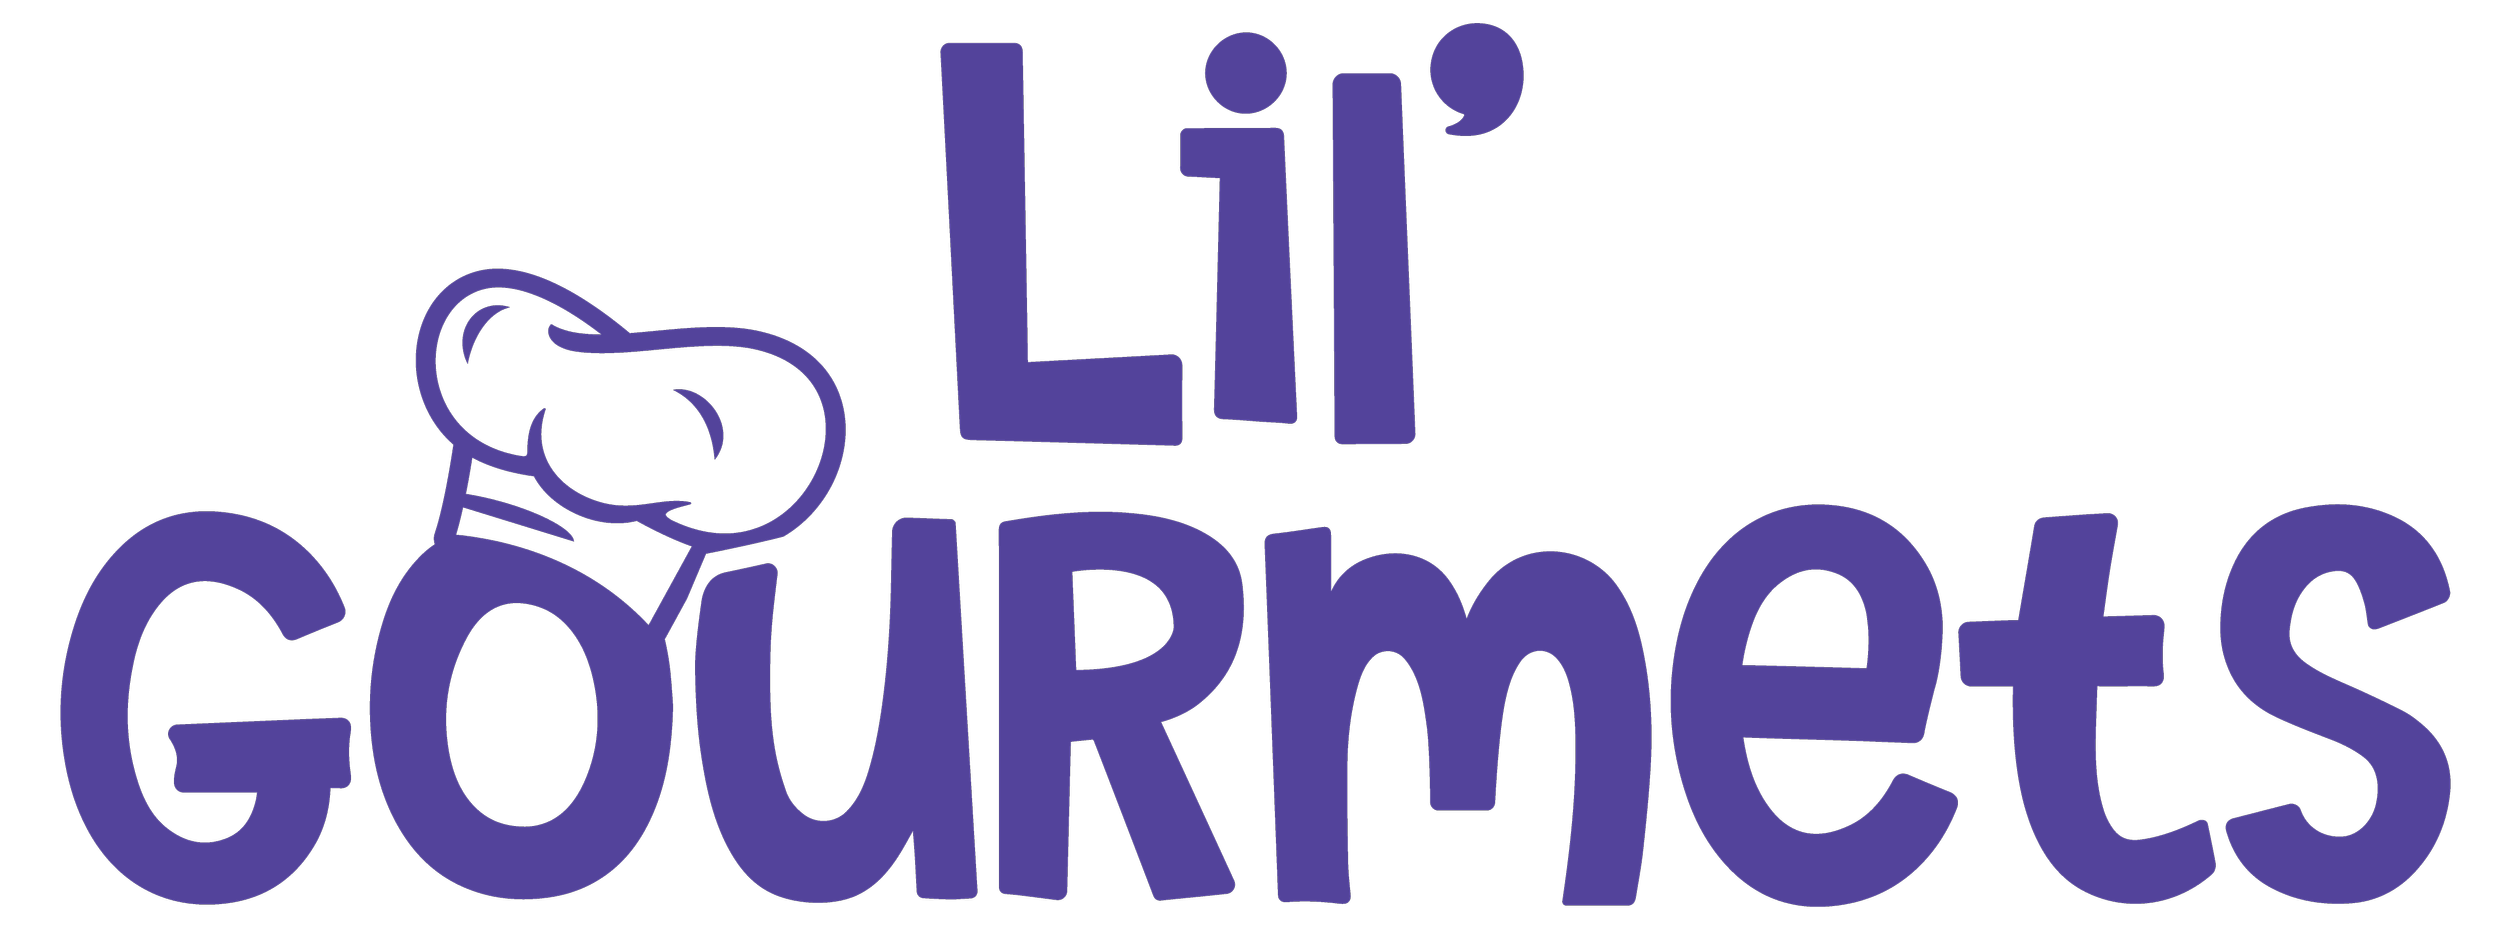 LilGourmets_Logo_Purple.png